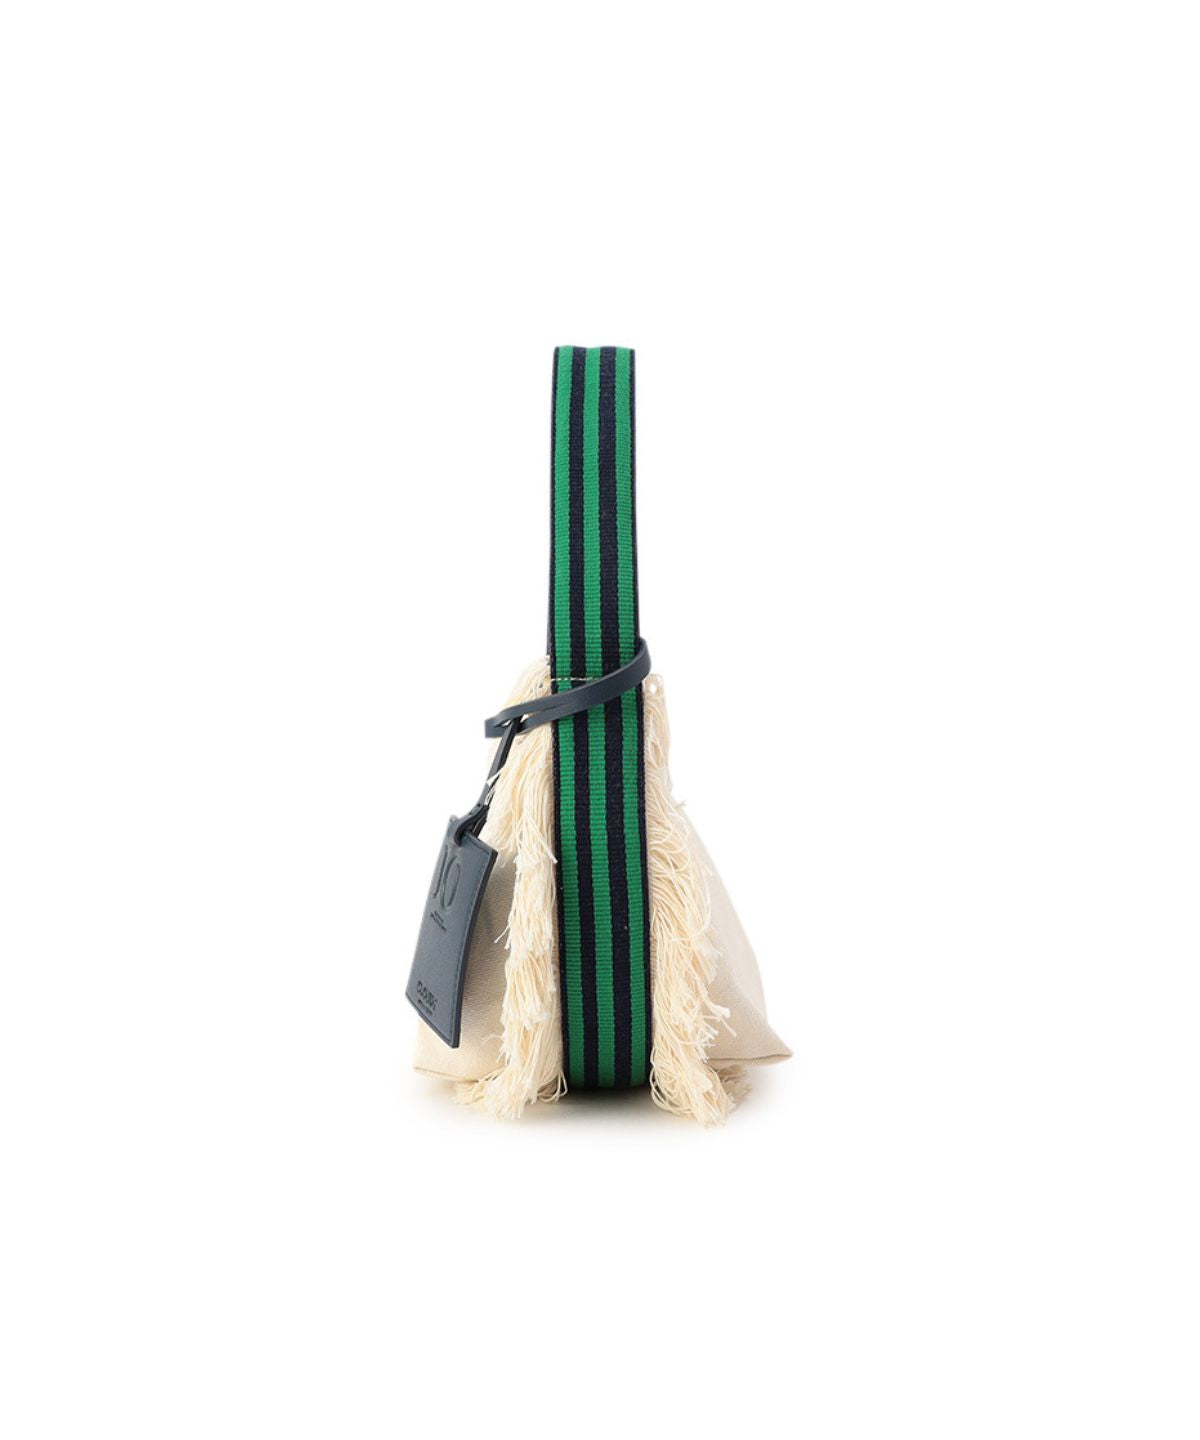 Canvas Kente fringe Bag (Small) NAVY/GREEN